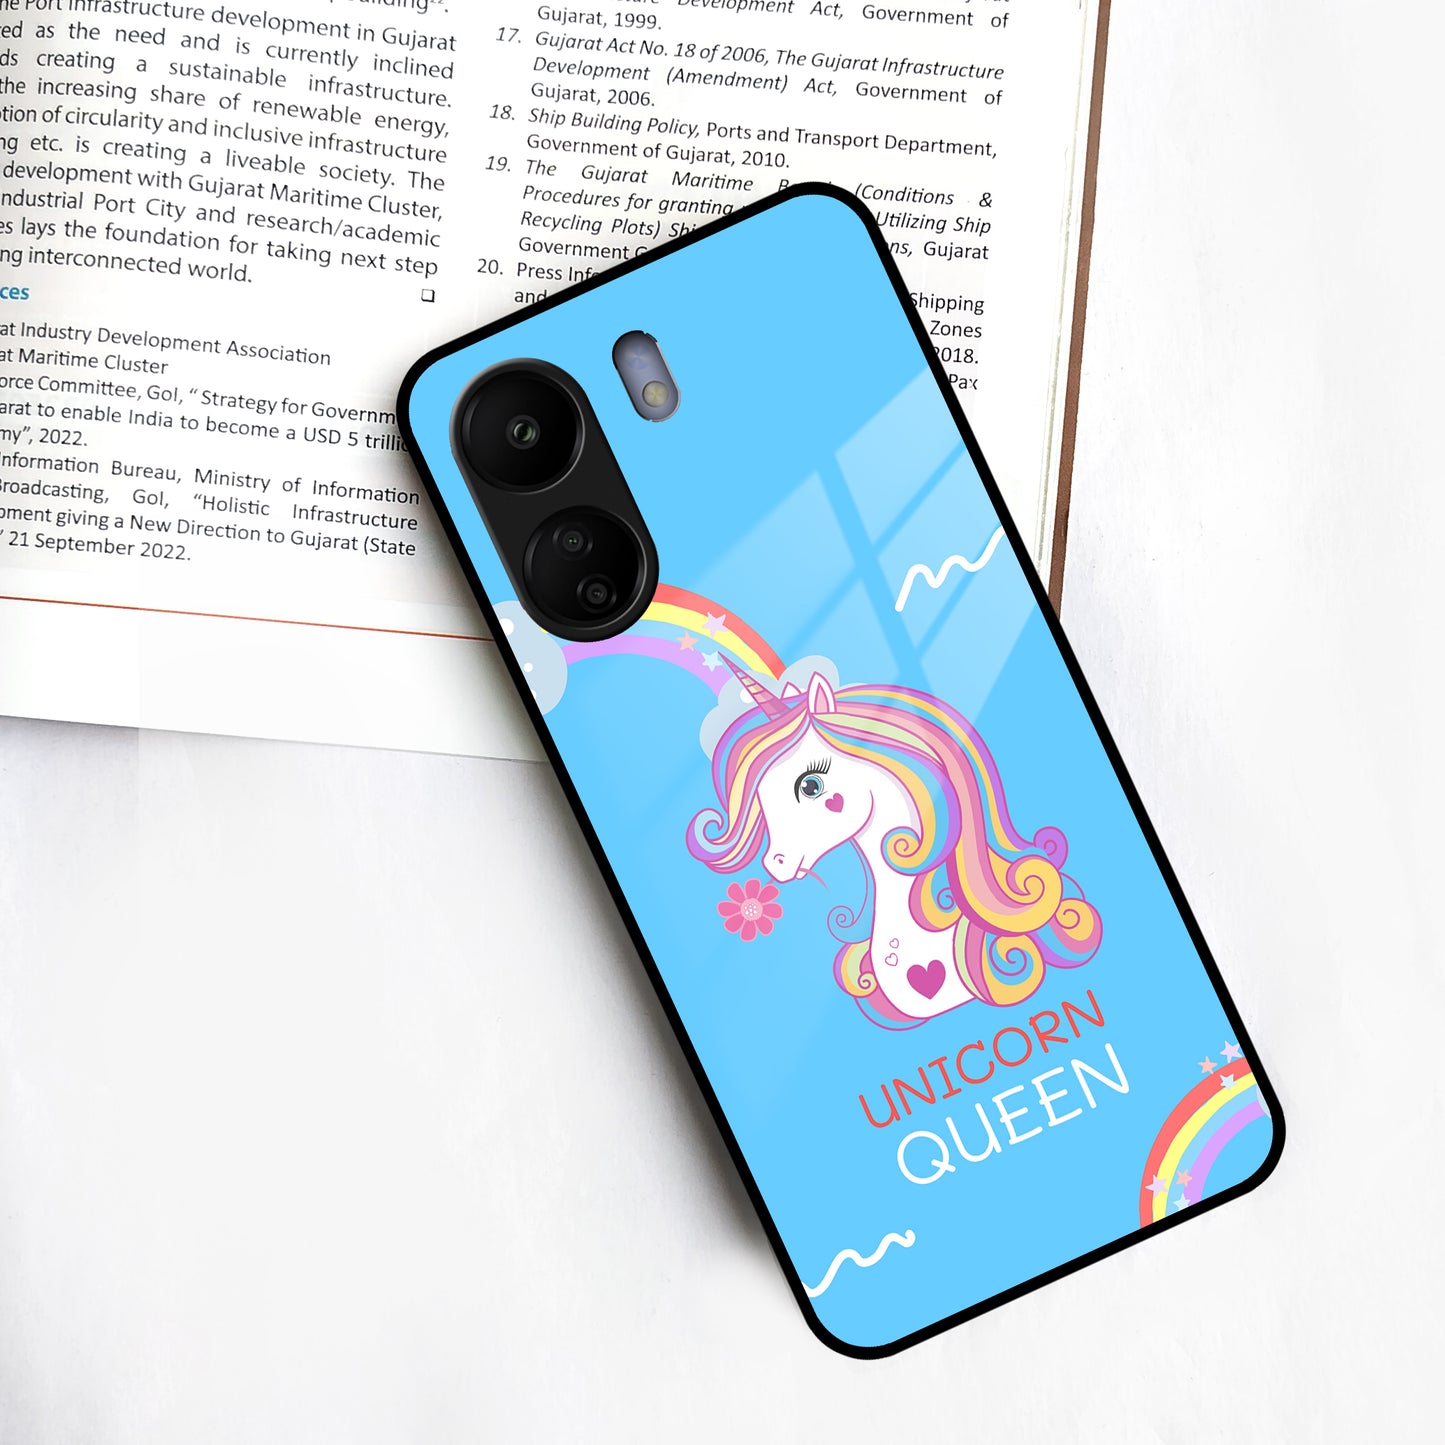 Blue Unicorn Queen Glass Phone Case For Redmi/Xiaomi